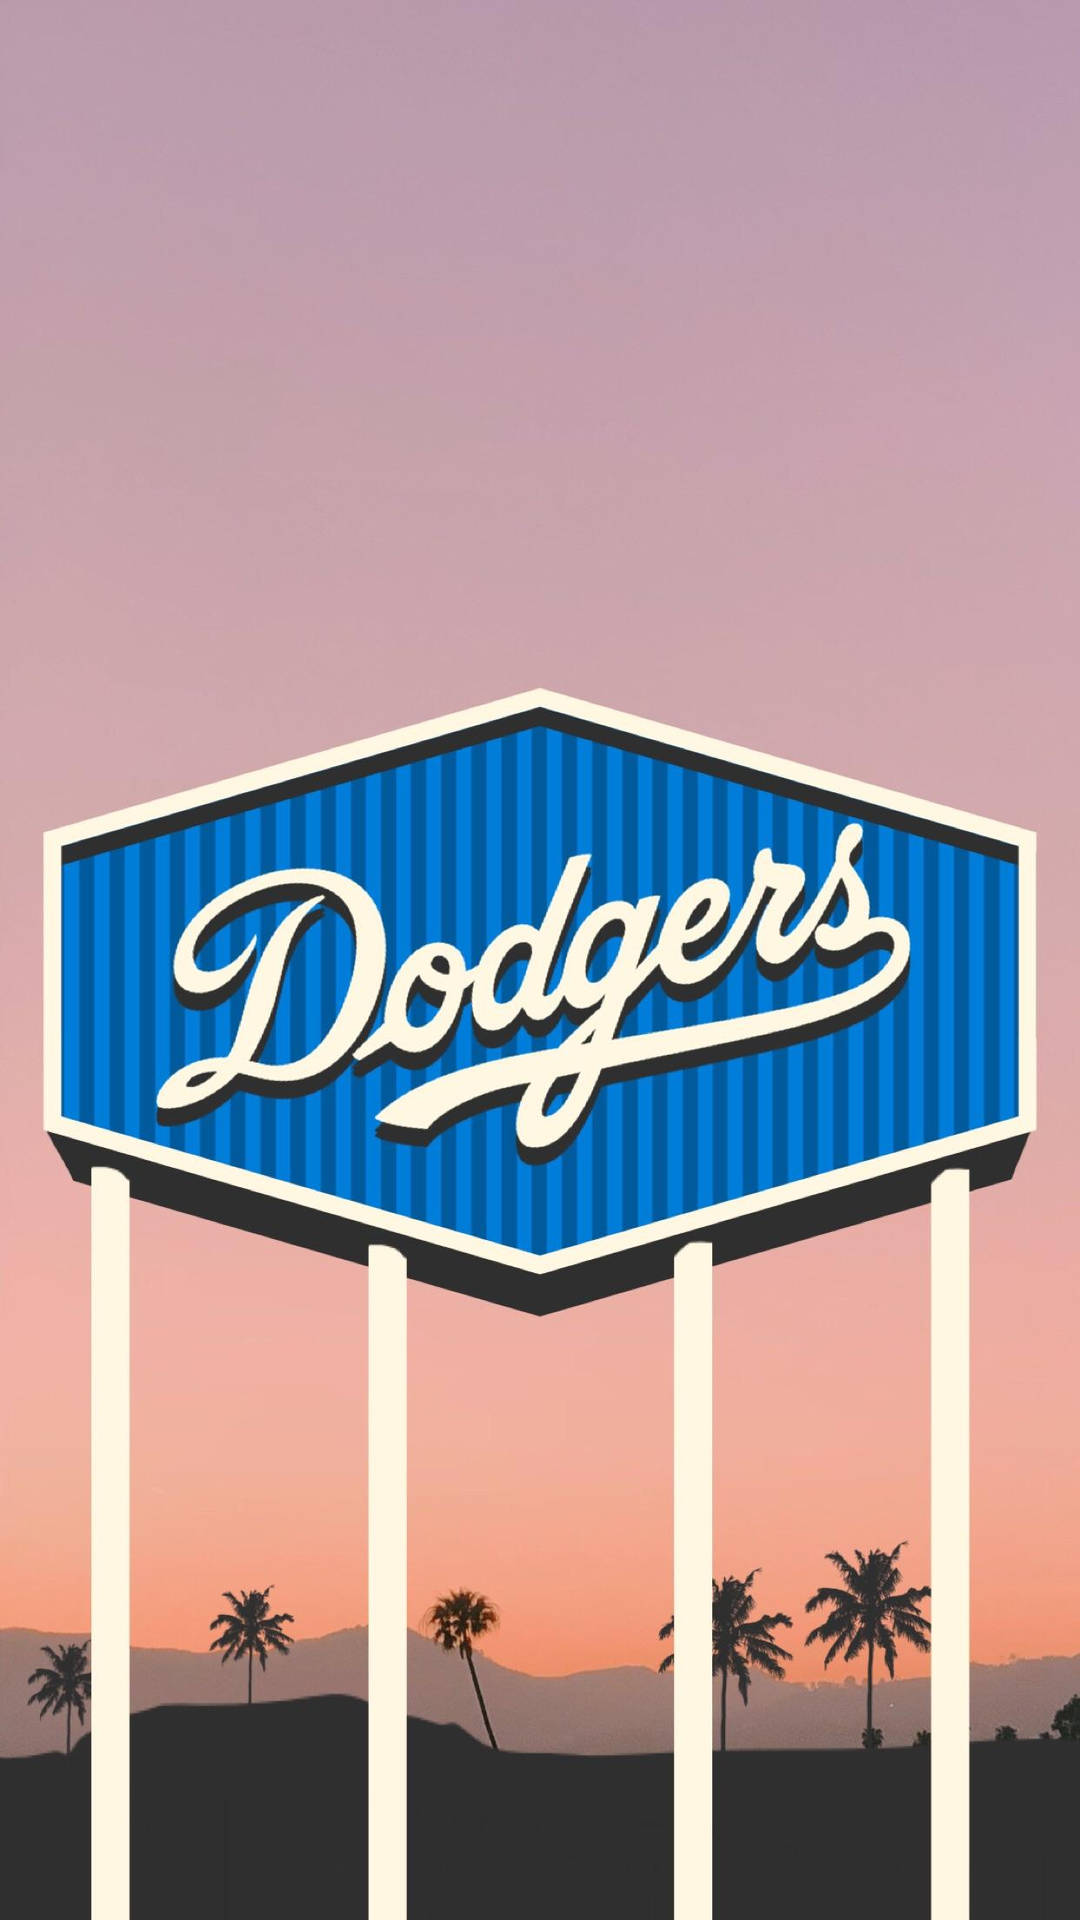 Dodgers Signage Vector Art Background